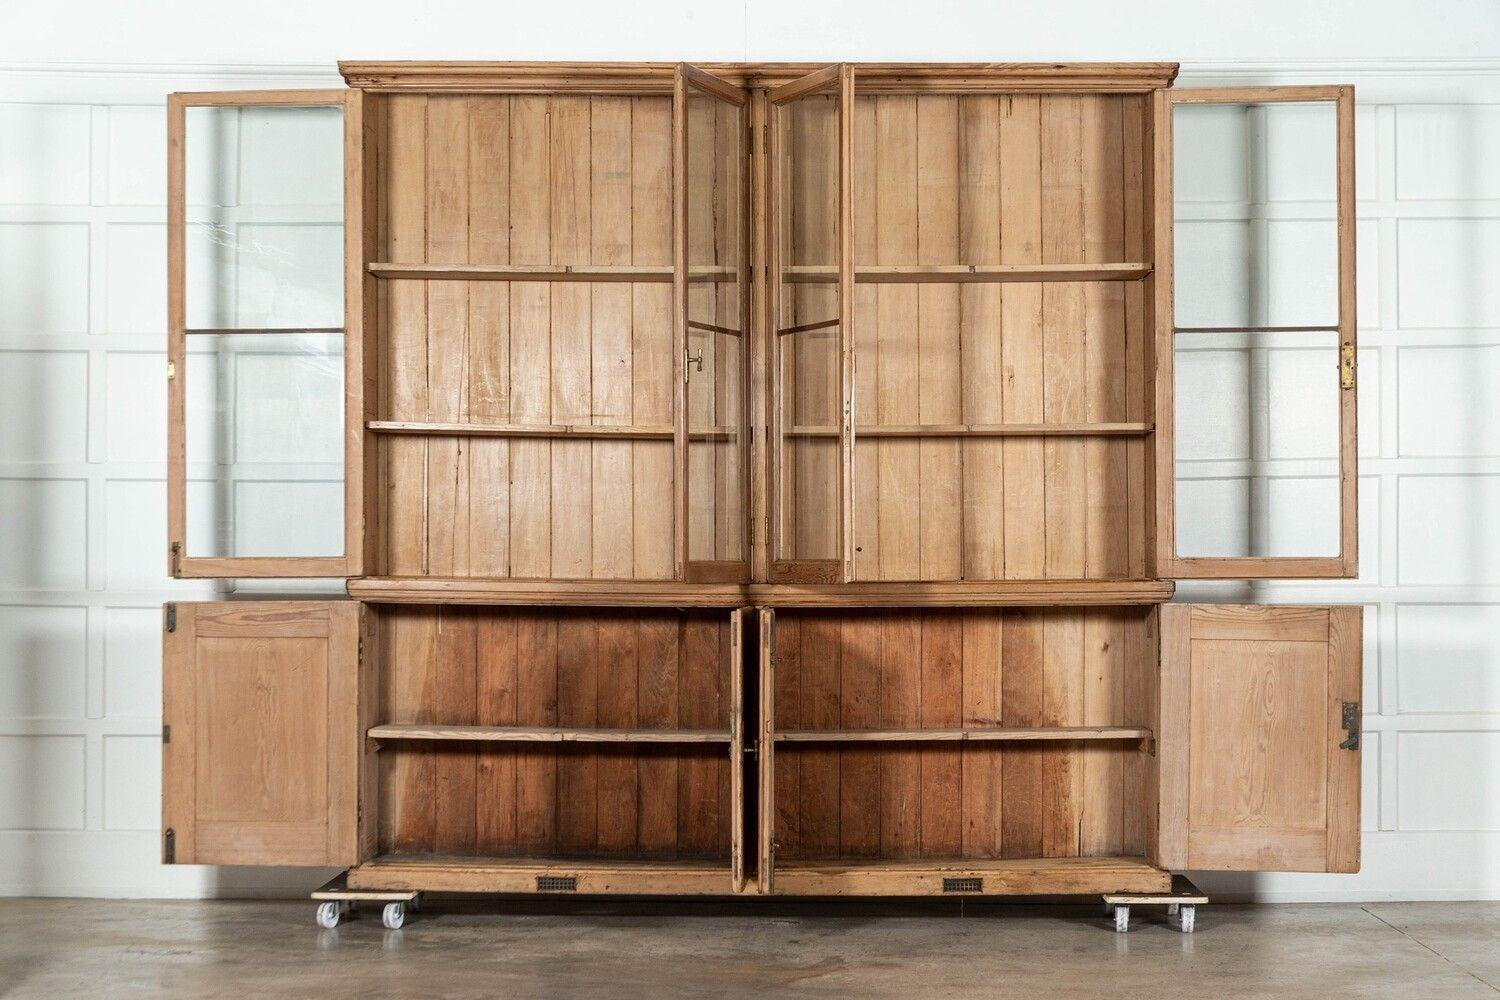 circa 1880
Monumental English Pine Glazed Bookcase Cabinet
sku 1769
Base W243 x D37 x H91 cm.
Top W246 x D37 x H151 cm.
Together W246 x D37 x H242 cm.
Weight 167 kg